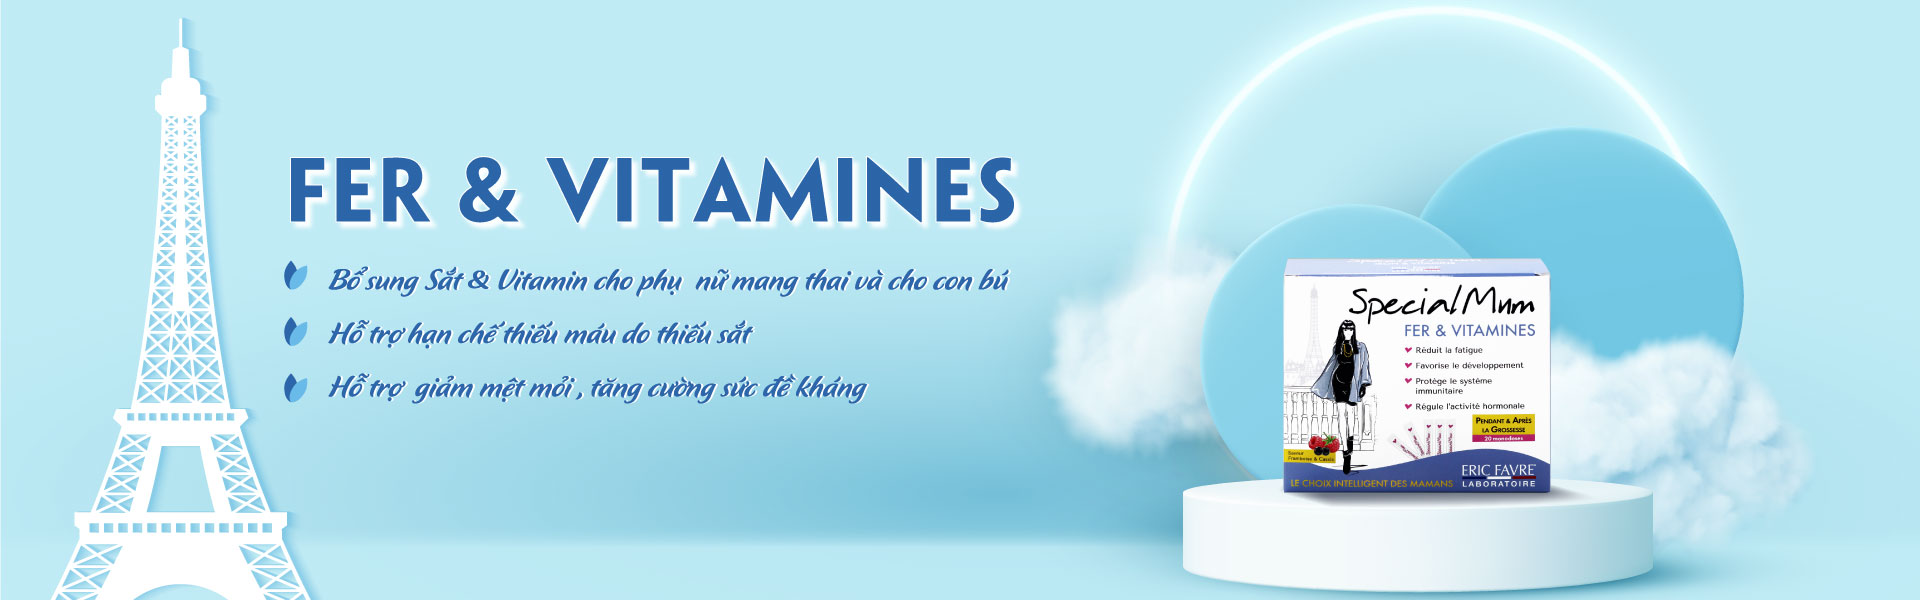 special-mum-fer-vitamines-bo-sung-sat-va-vitamins-cho-phu-nu-mang-thai-va-cho-con-bu